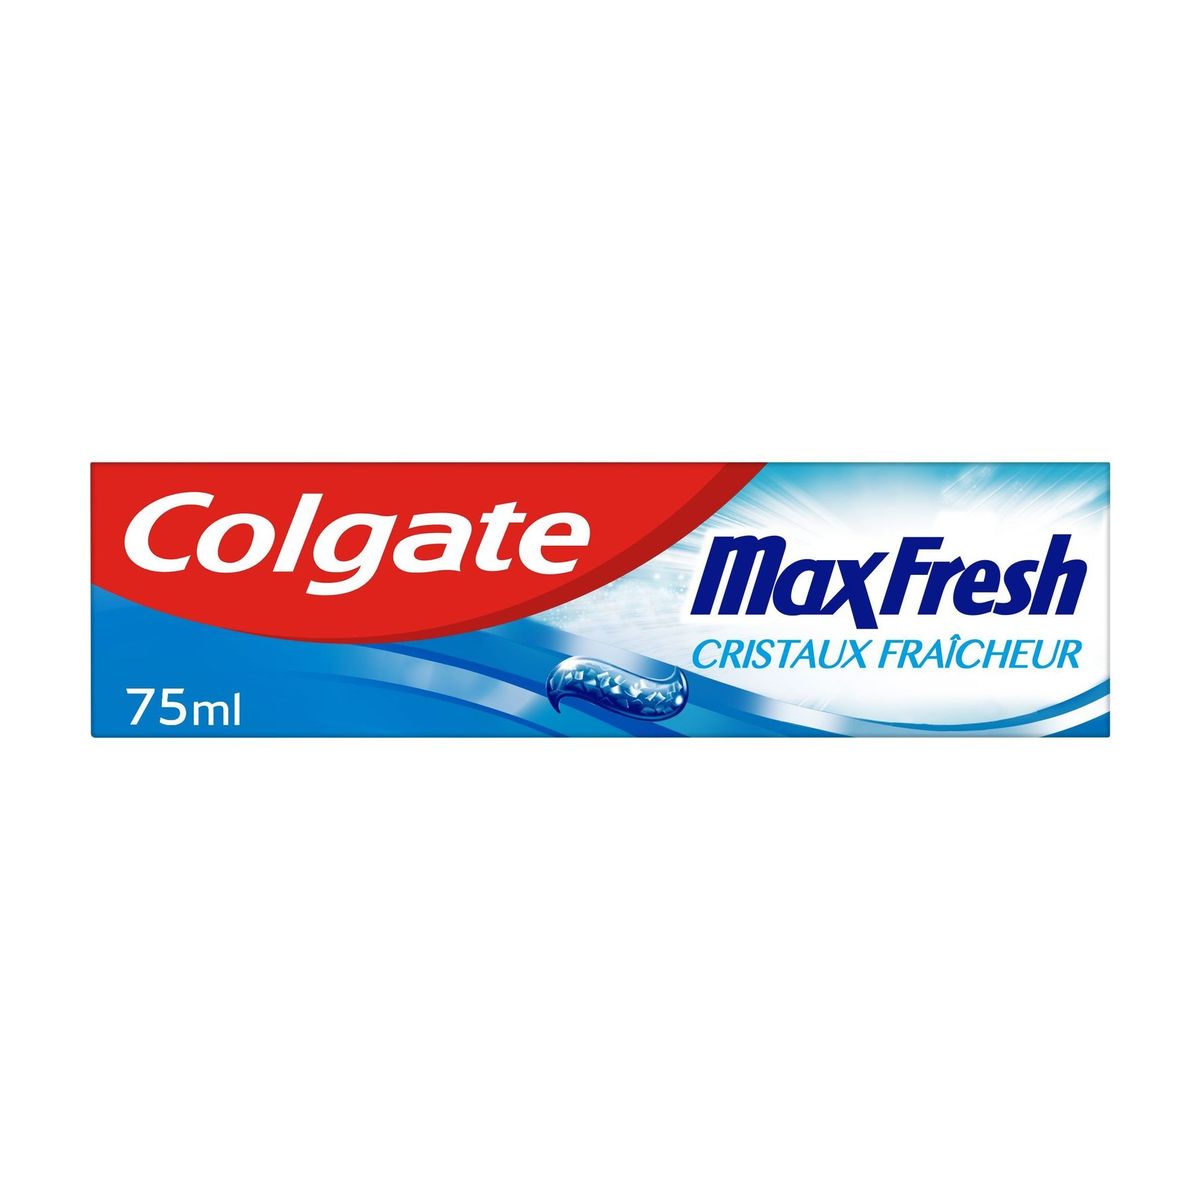 Colgate Max Fresh cristaux fraicheur menthe douce dentifrice 75ml